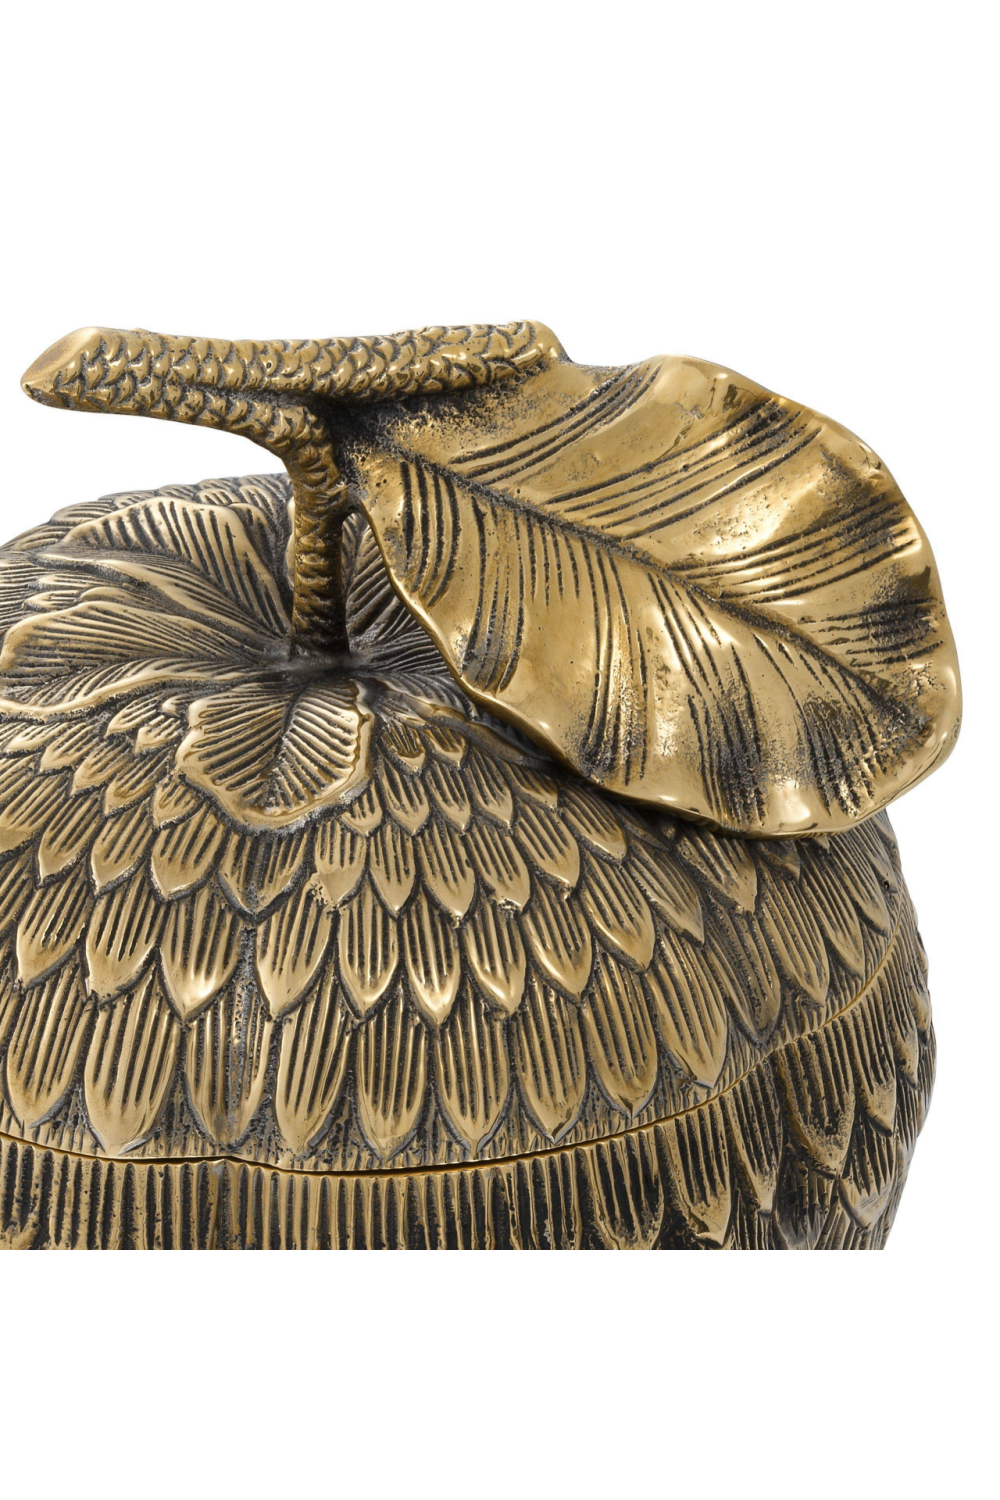 Vintage Brass Decorative Box | Eichholtz Custard Apple | OROA